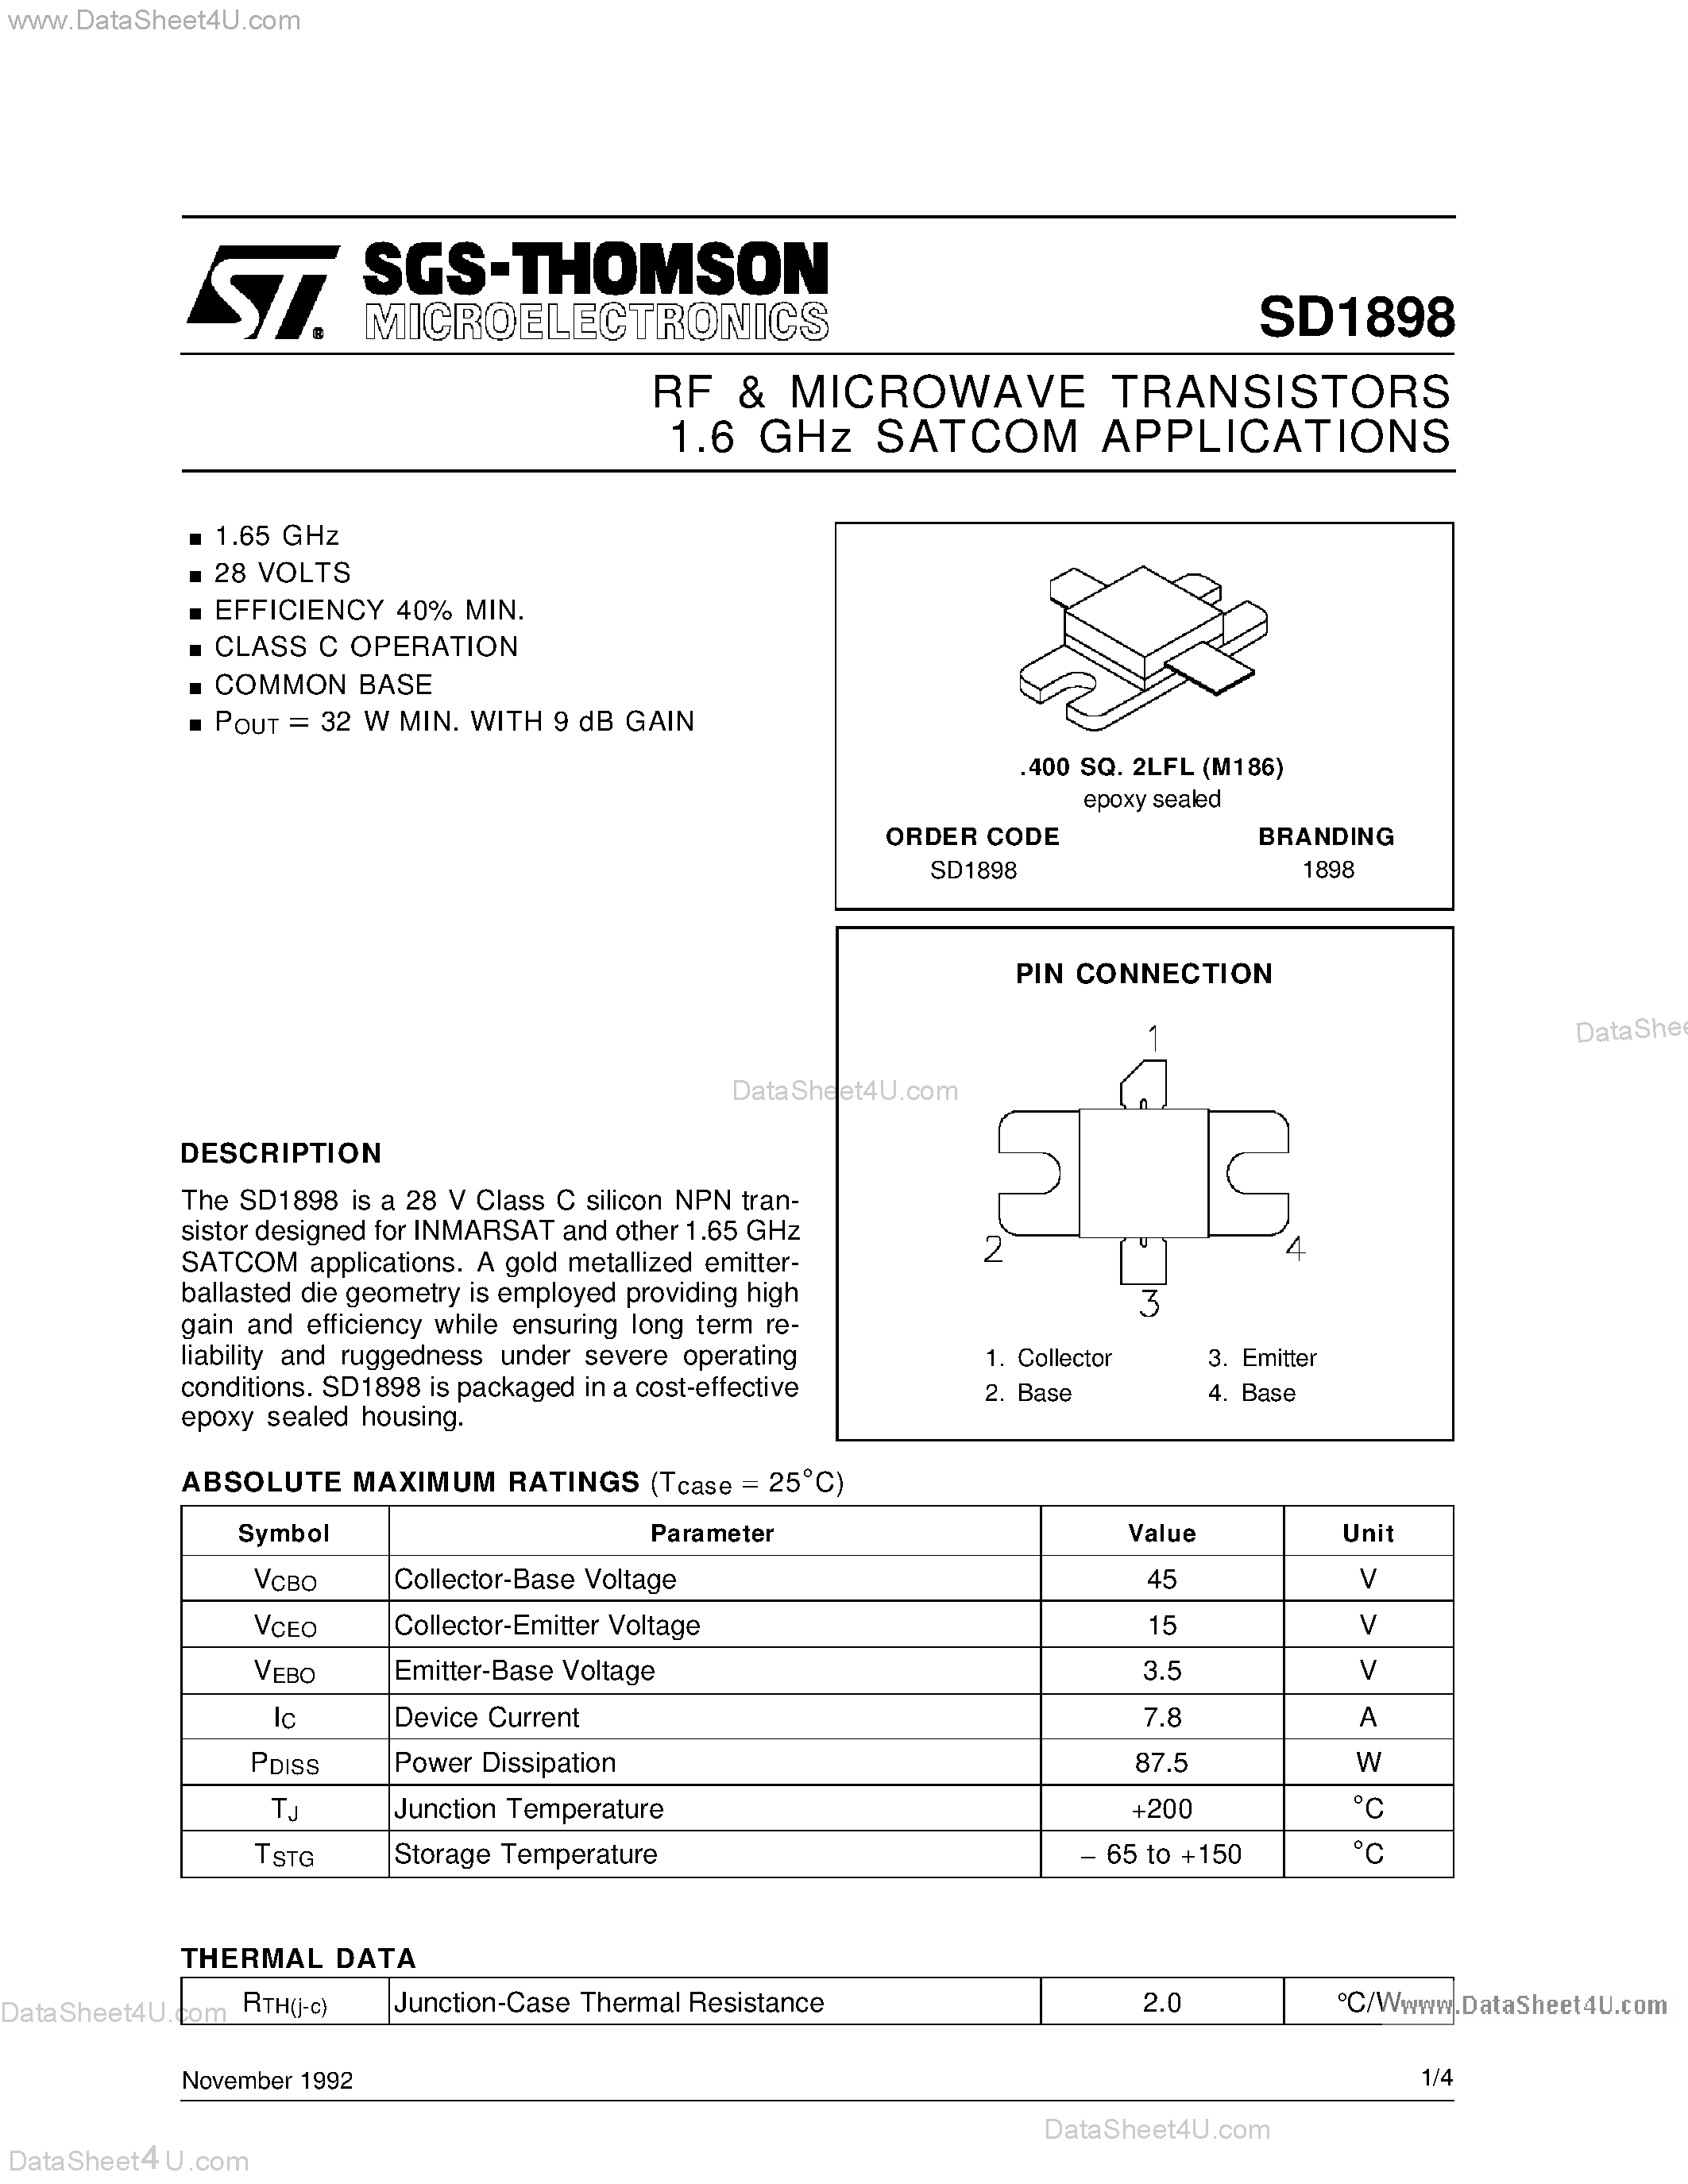 Datasheet SD1898 - RF & MICROWAVE TRANSISTORS 1.6 GHz SATCOM APPLICATIONS page 1